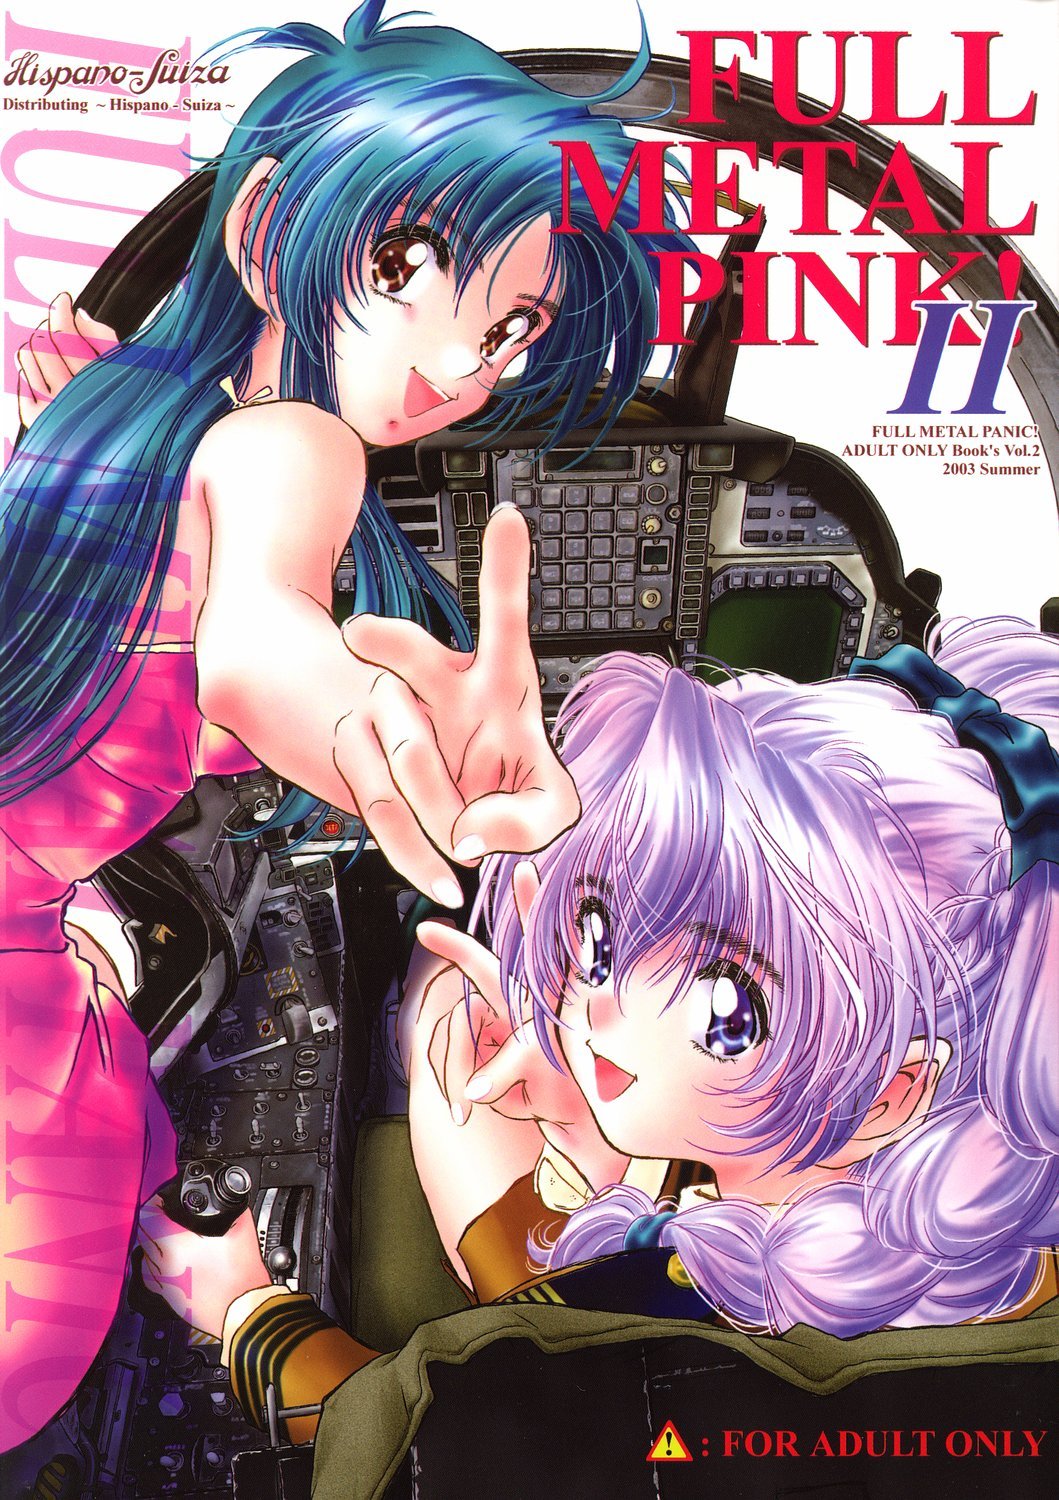 Full Metal Pink! II full metal panic hentai manga